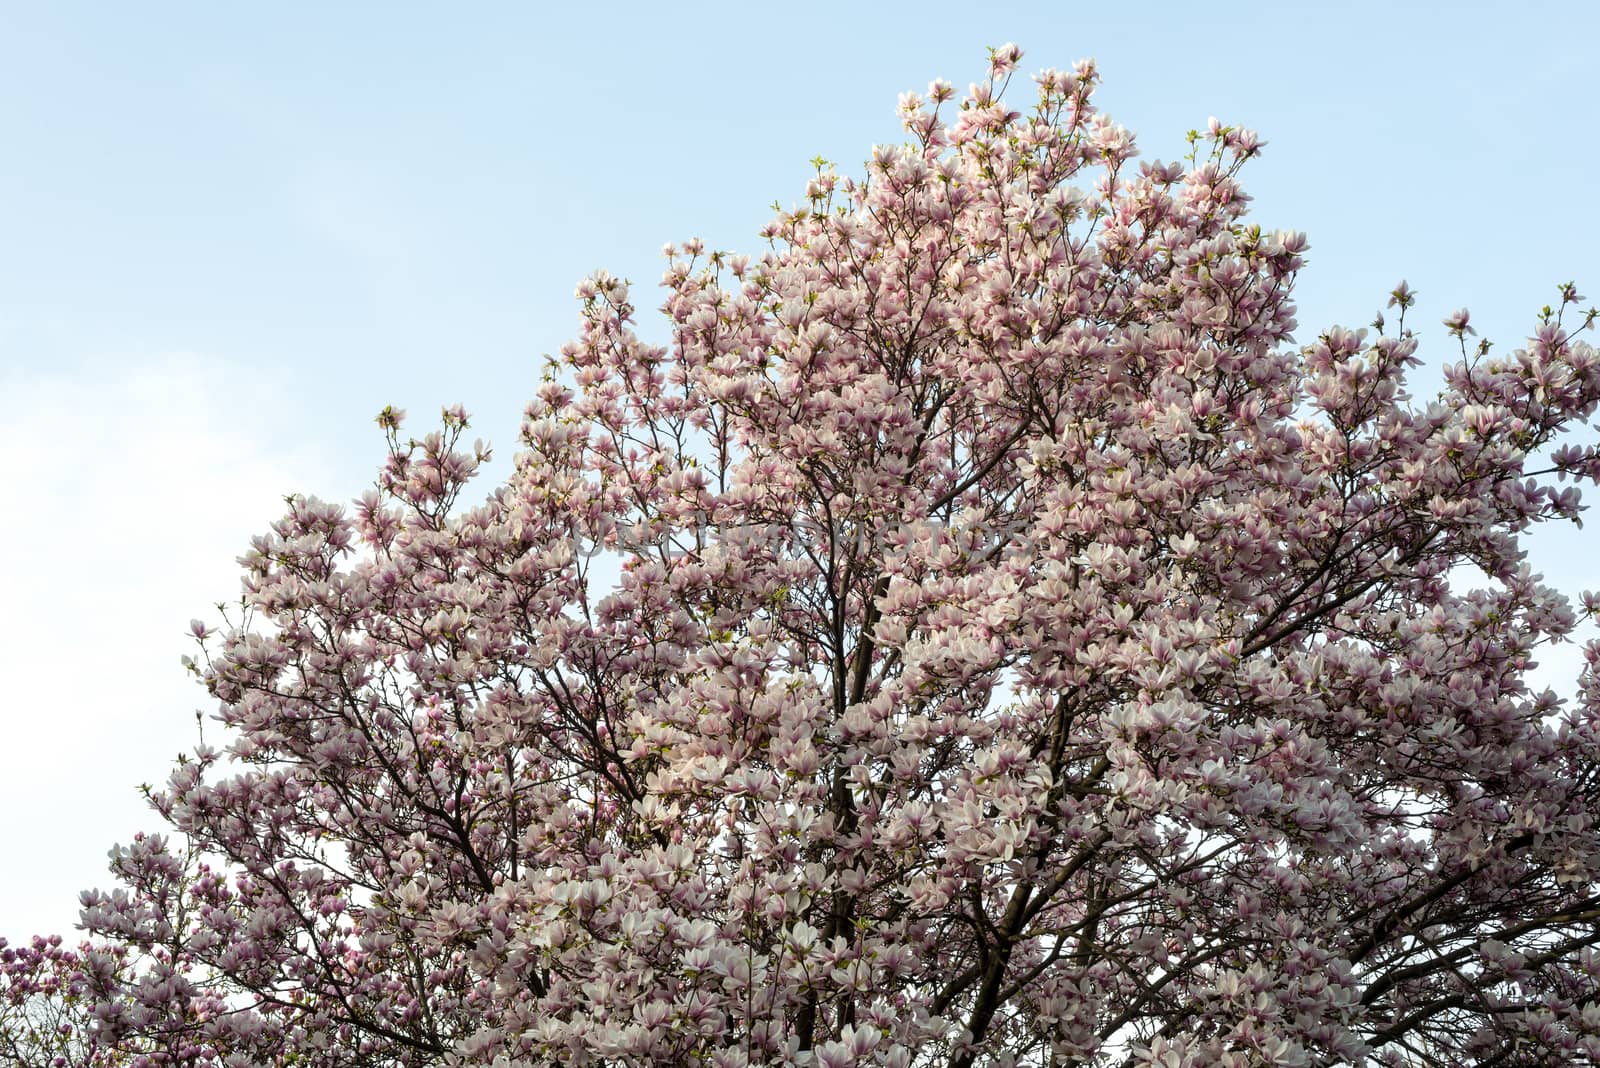 Magnolia blossom tree in spring by DNKSTUDIO